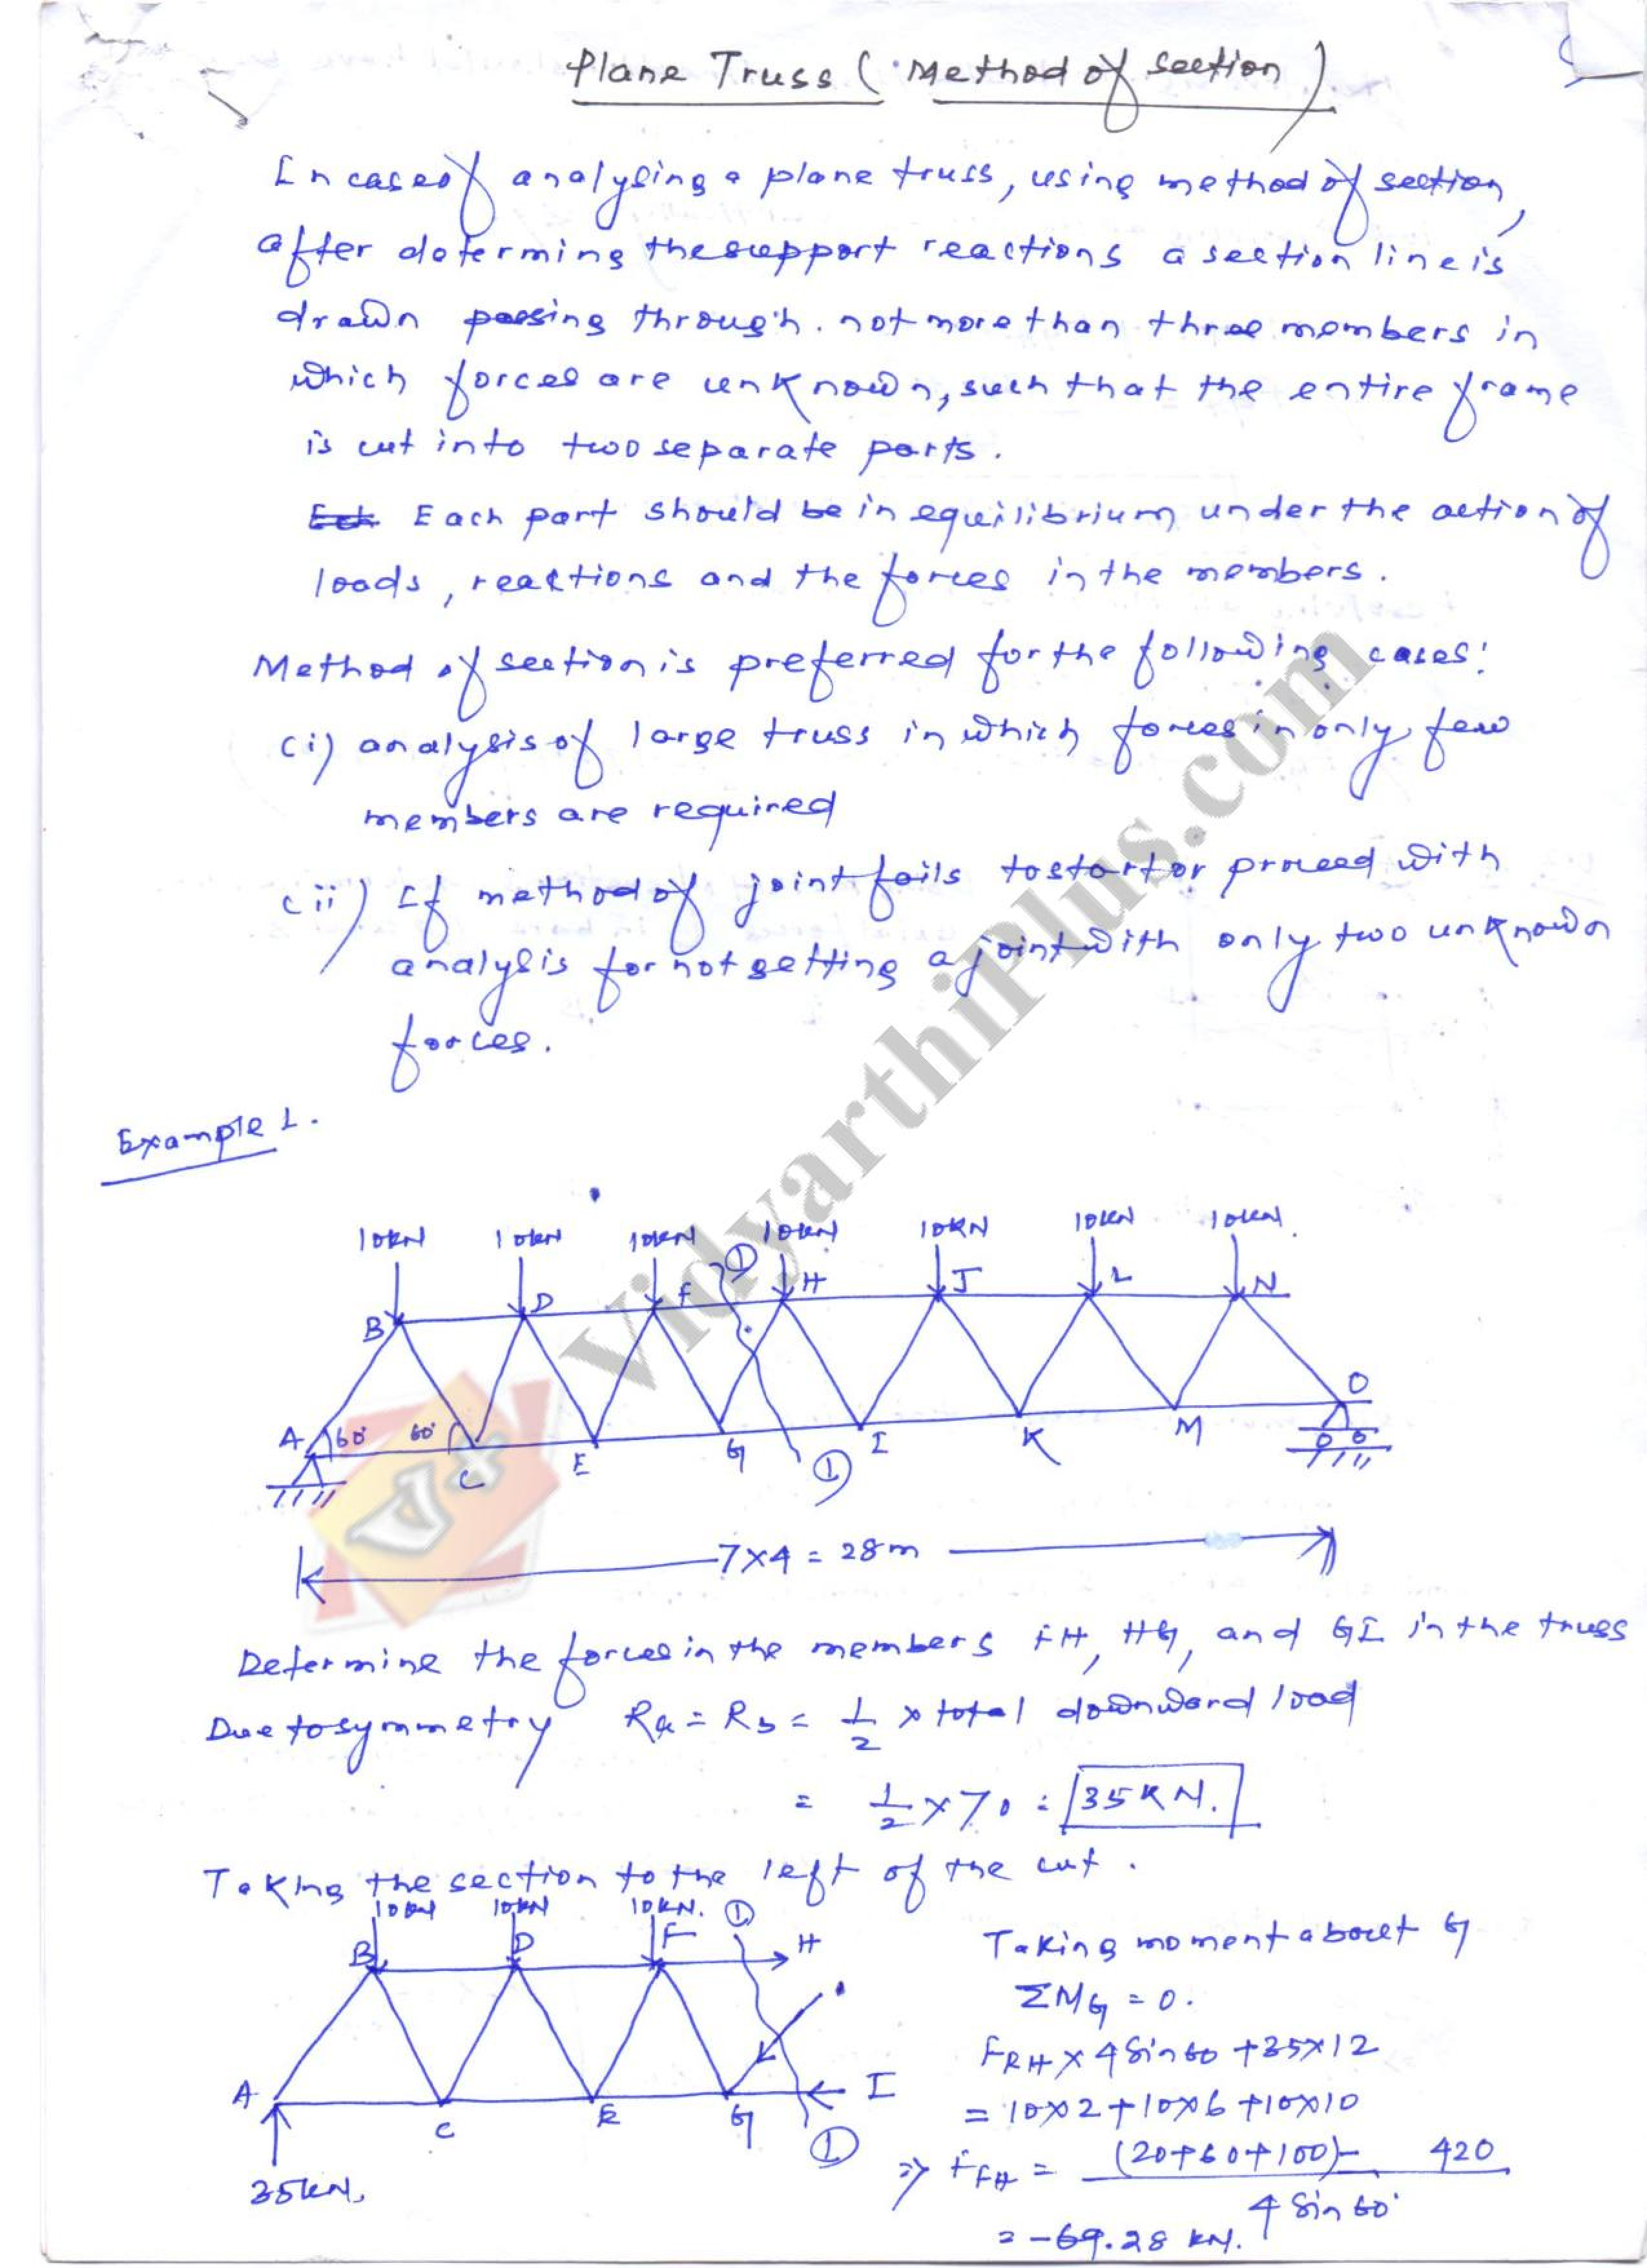 Engineering Mechanics Premium Lecture Notes - Deepthi Edition